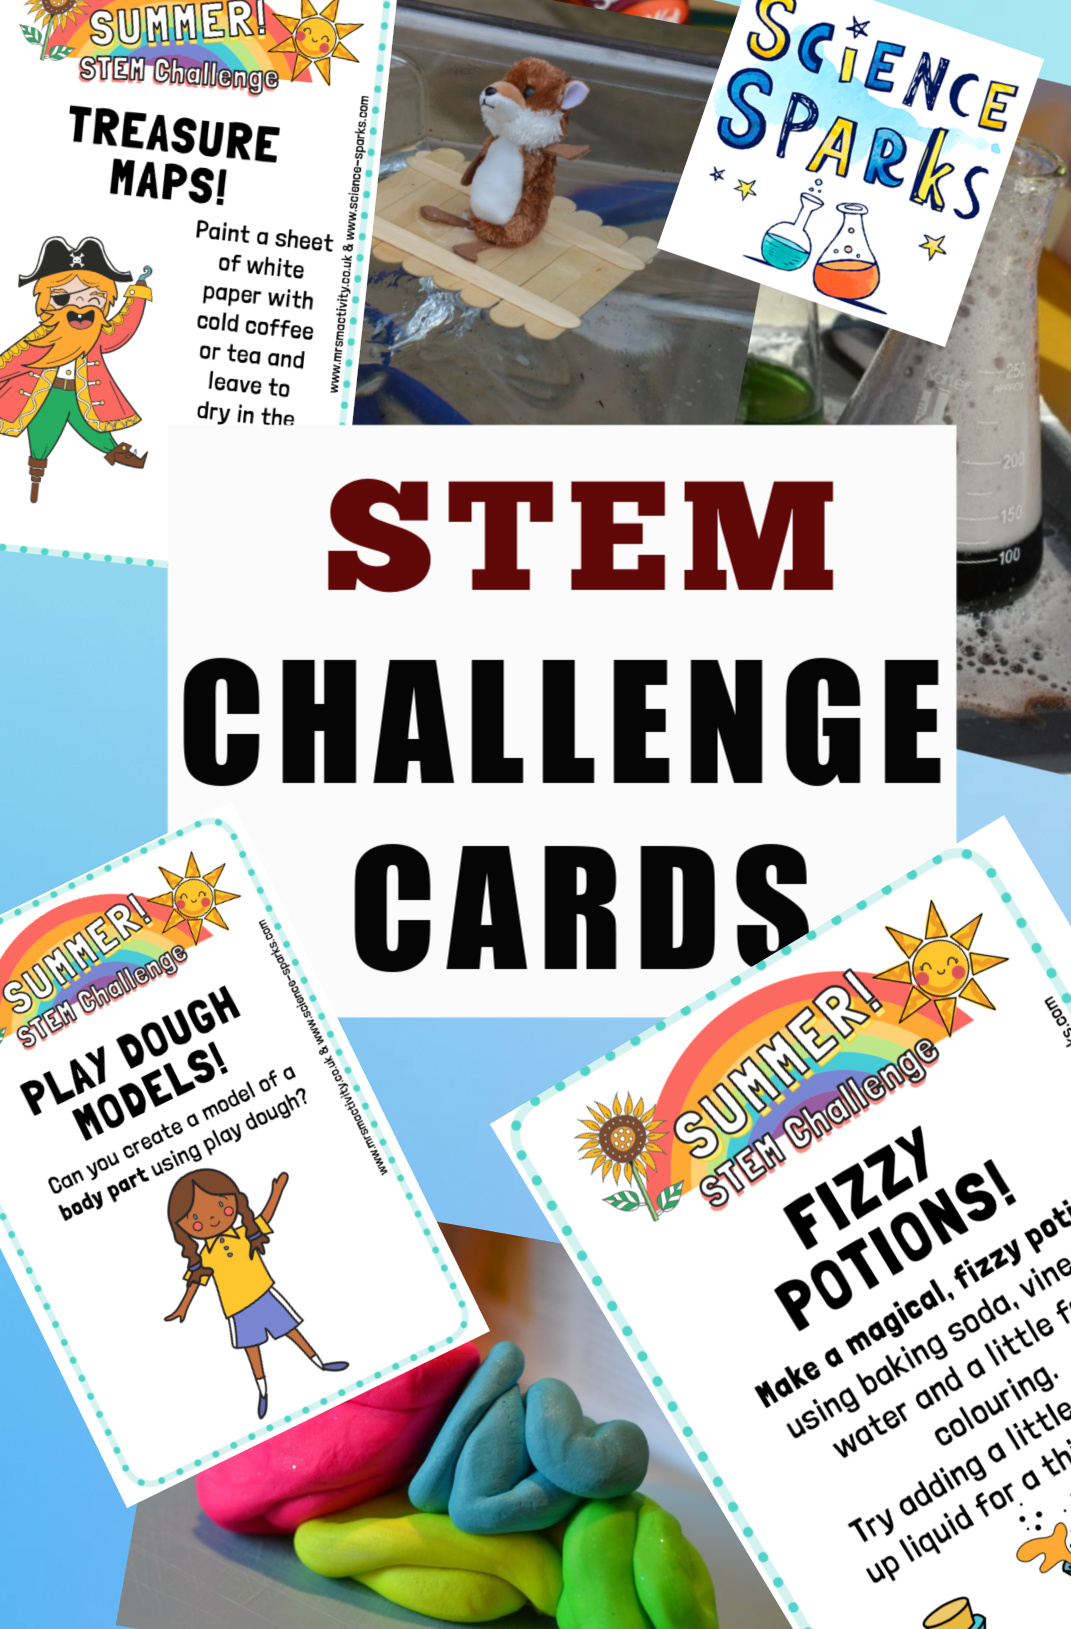 STEM Challenge cards